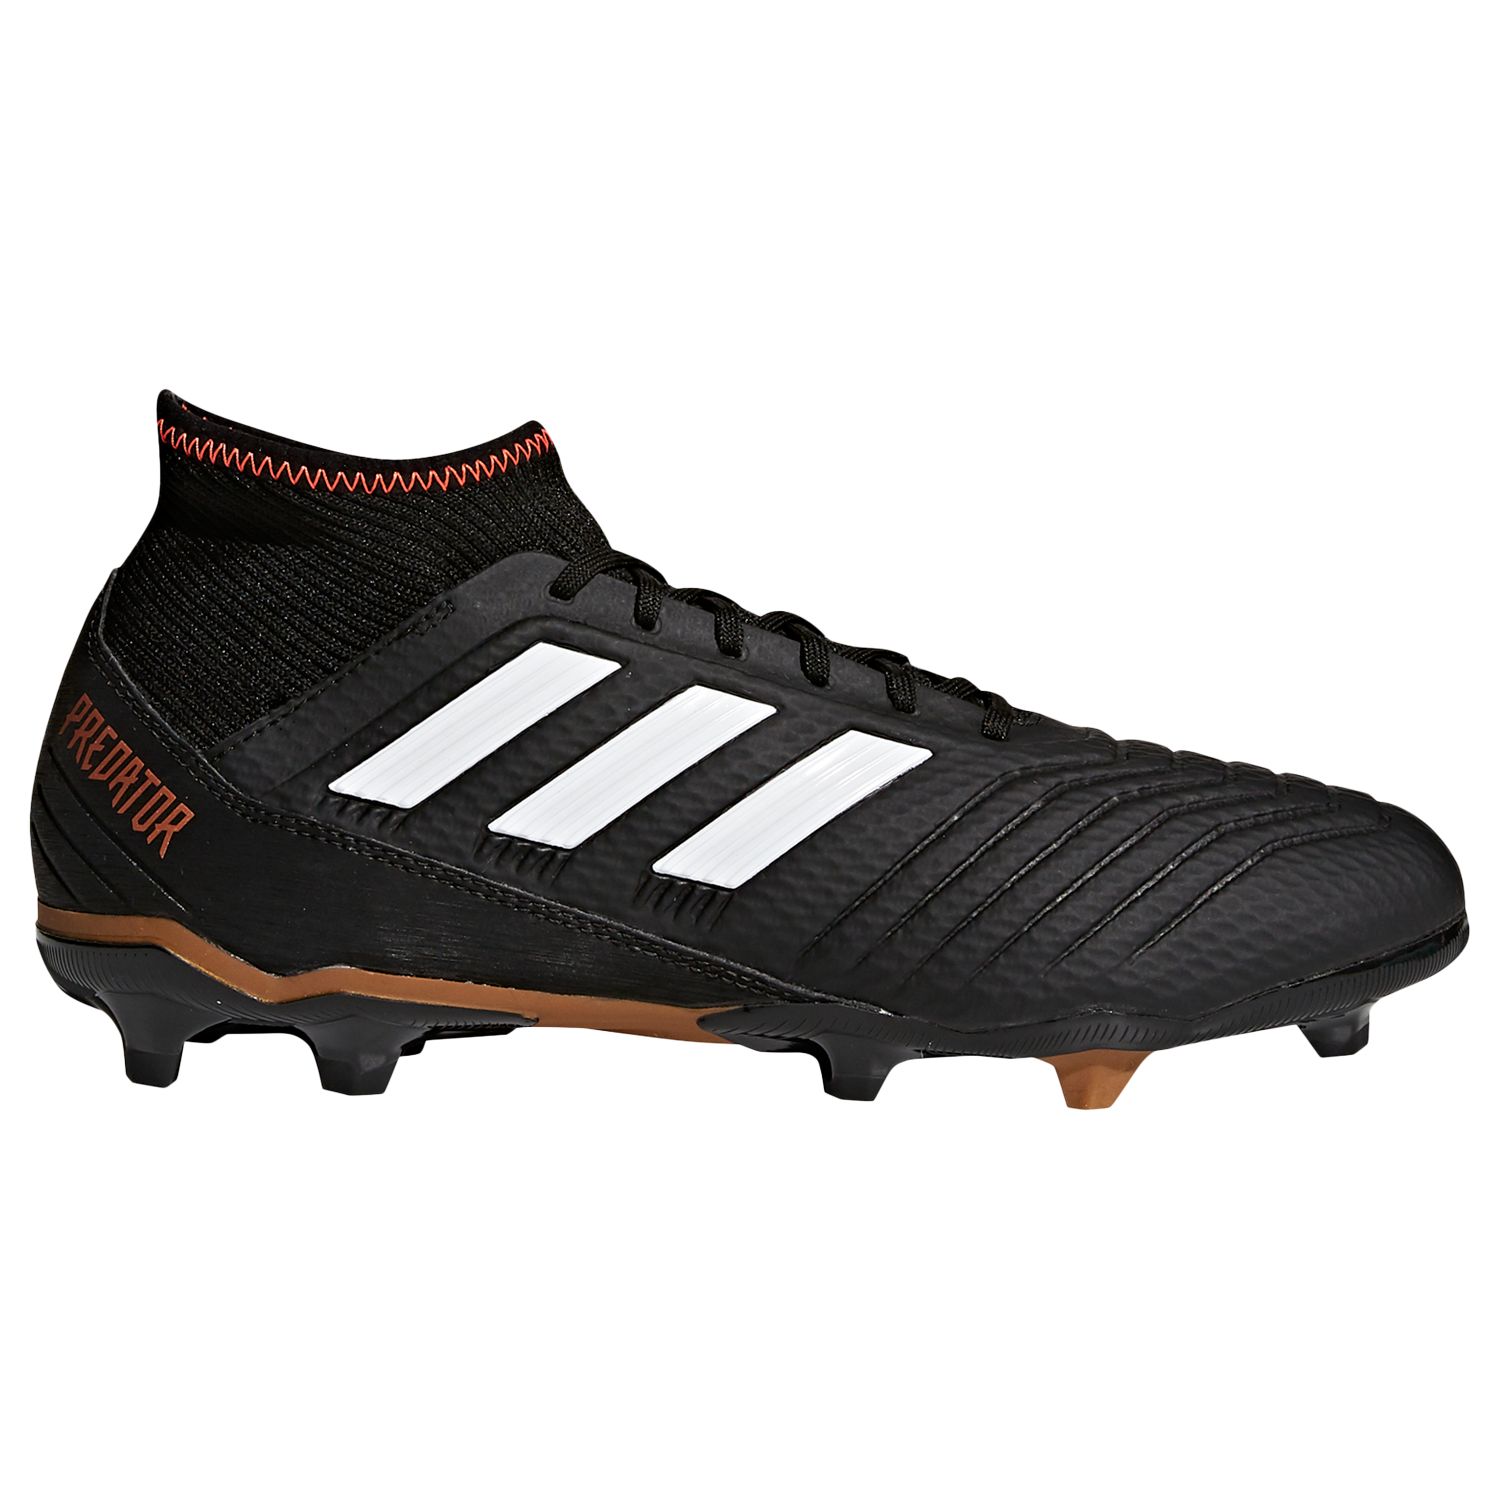 predator football boots black